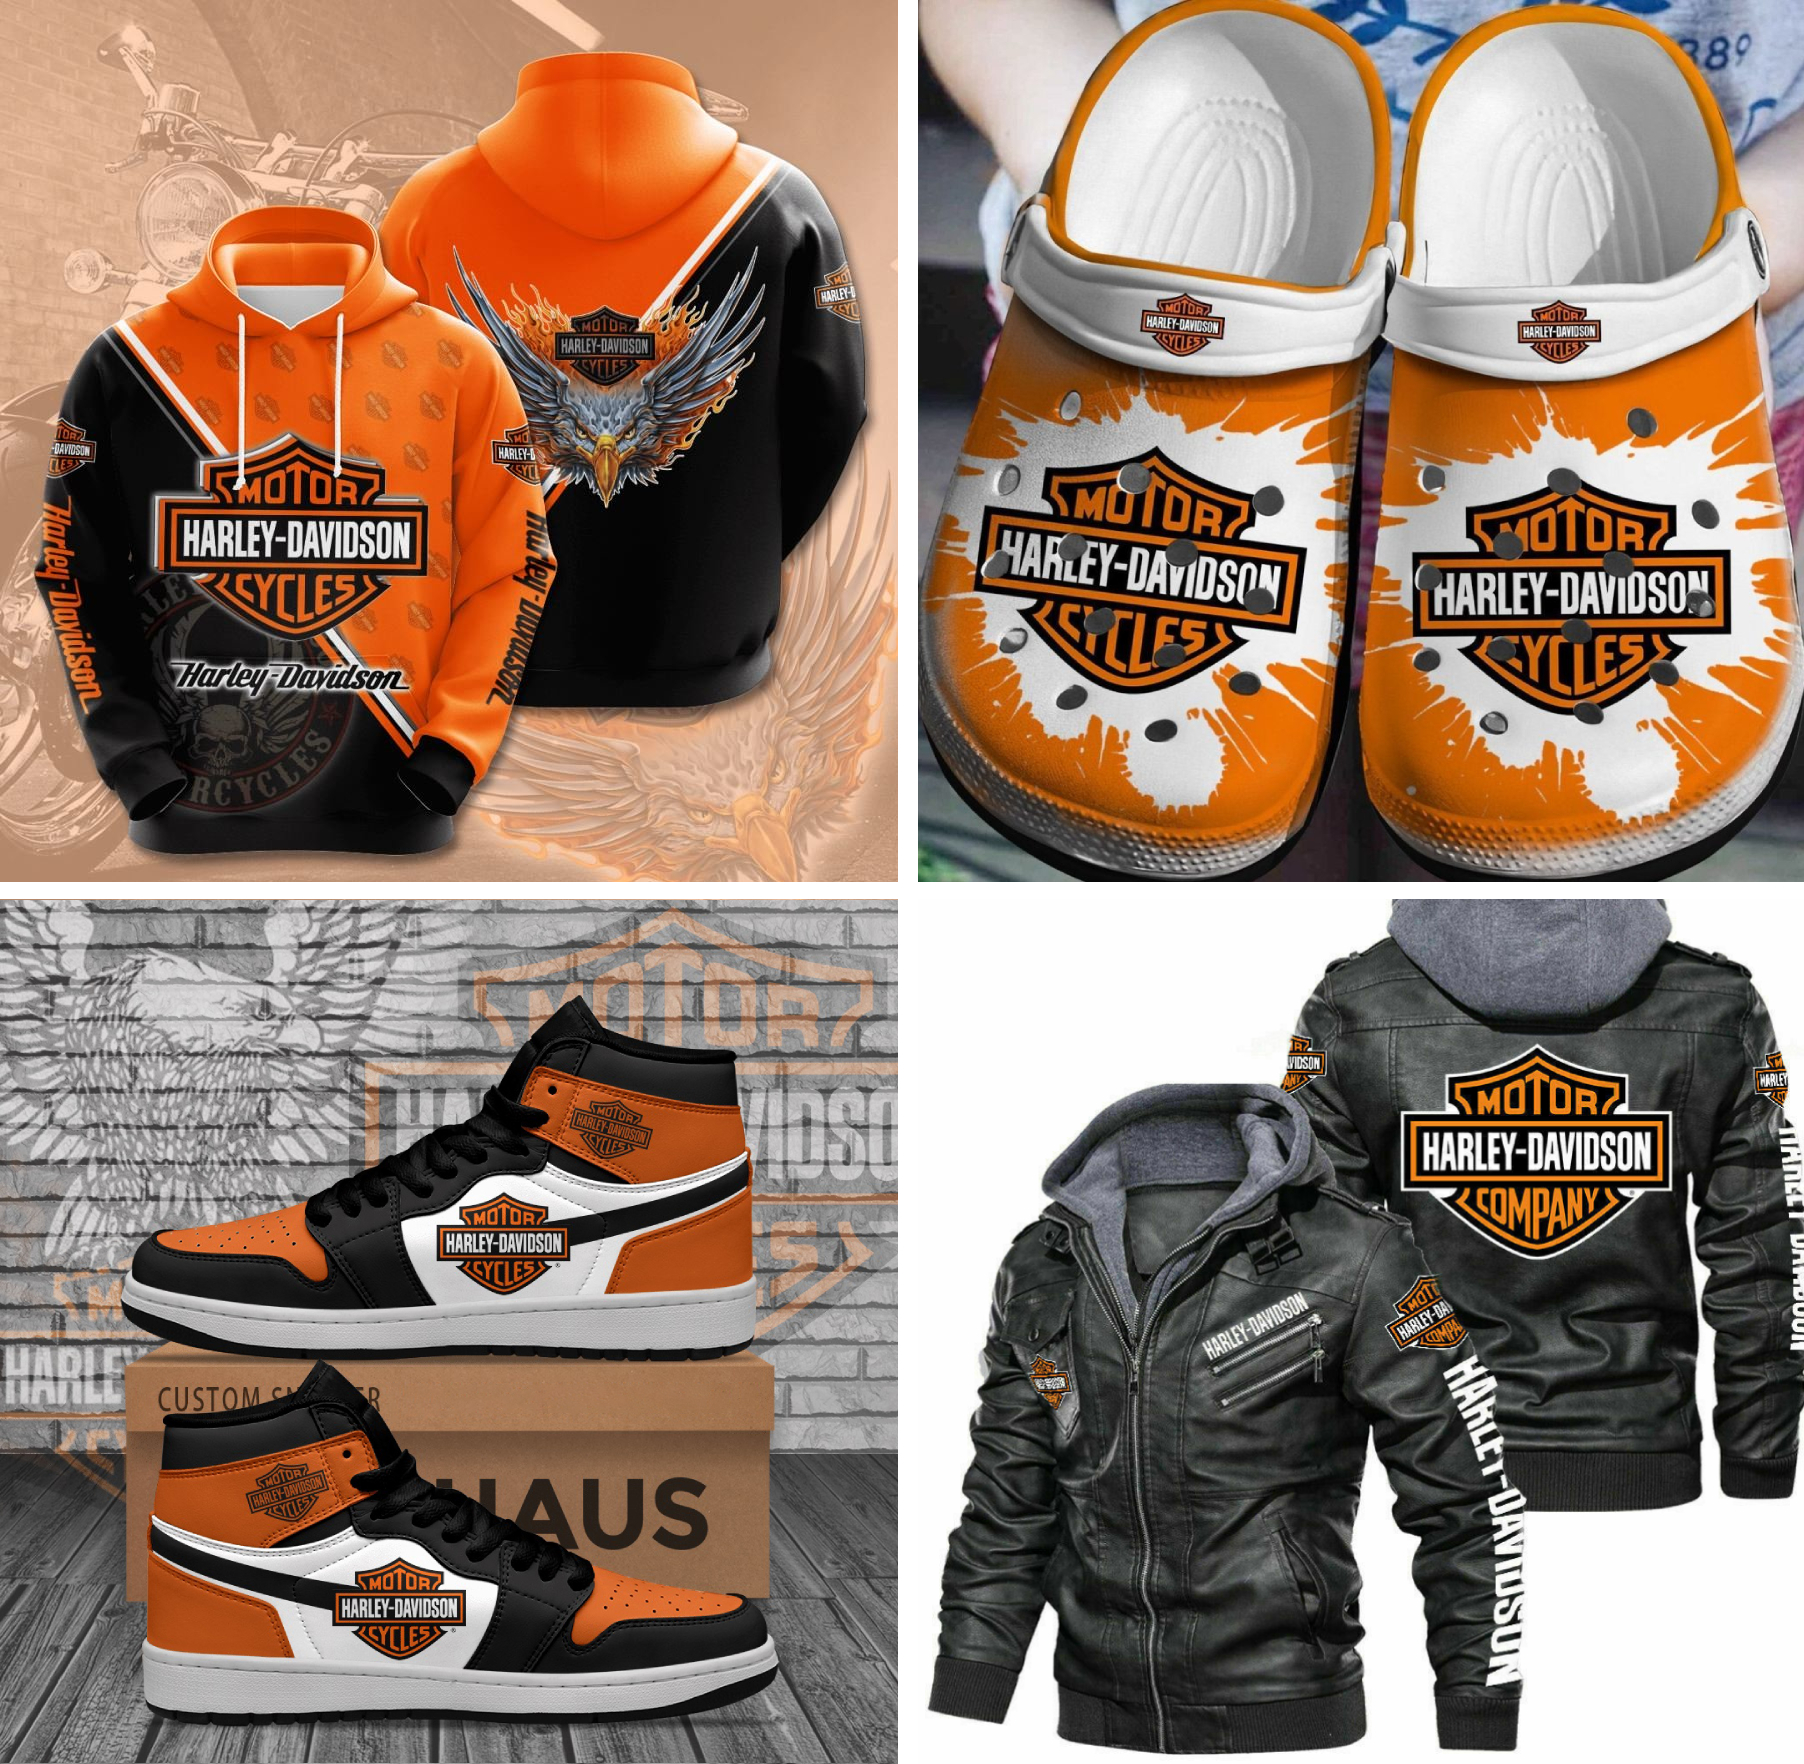 Harley Davidson apparel Who owns Harley Davidson